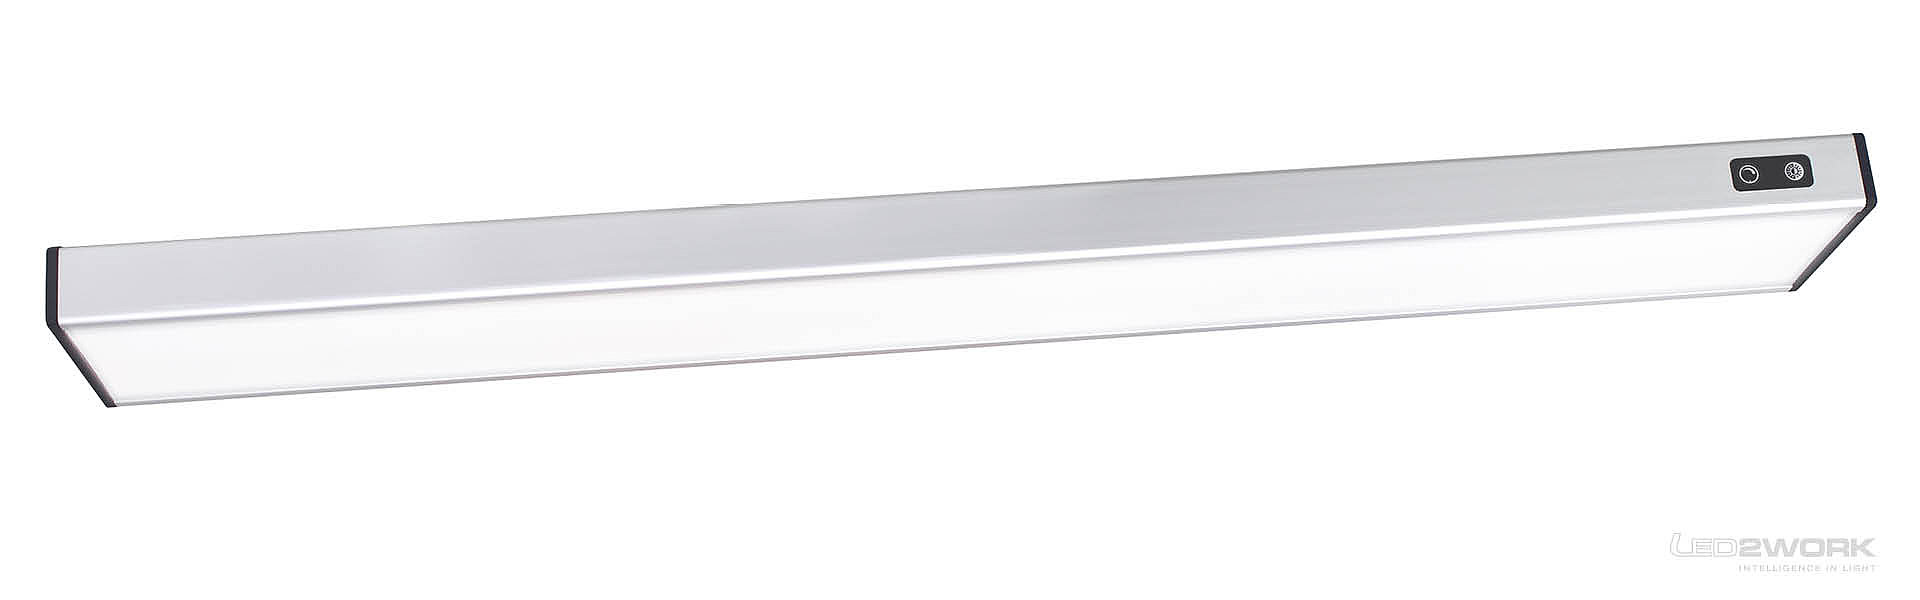 Ilustración de la luminaria LED de trabajo | Luminaria LED de sistema SYSTEMLED TUNABLE WHITE de LED2WORK